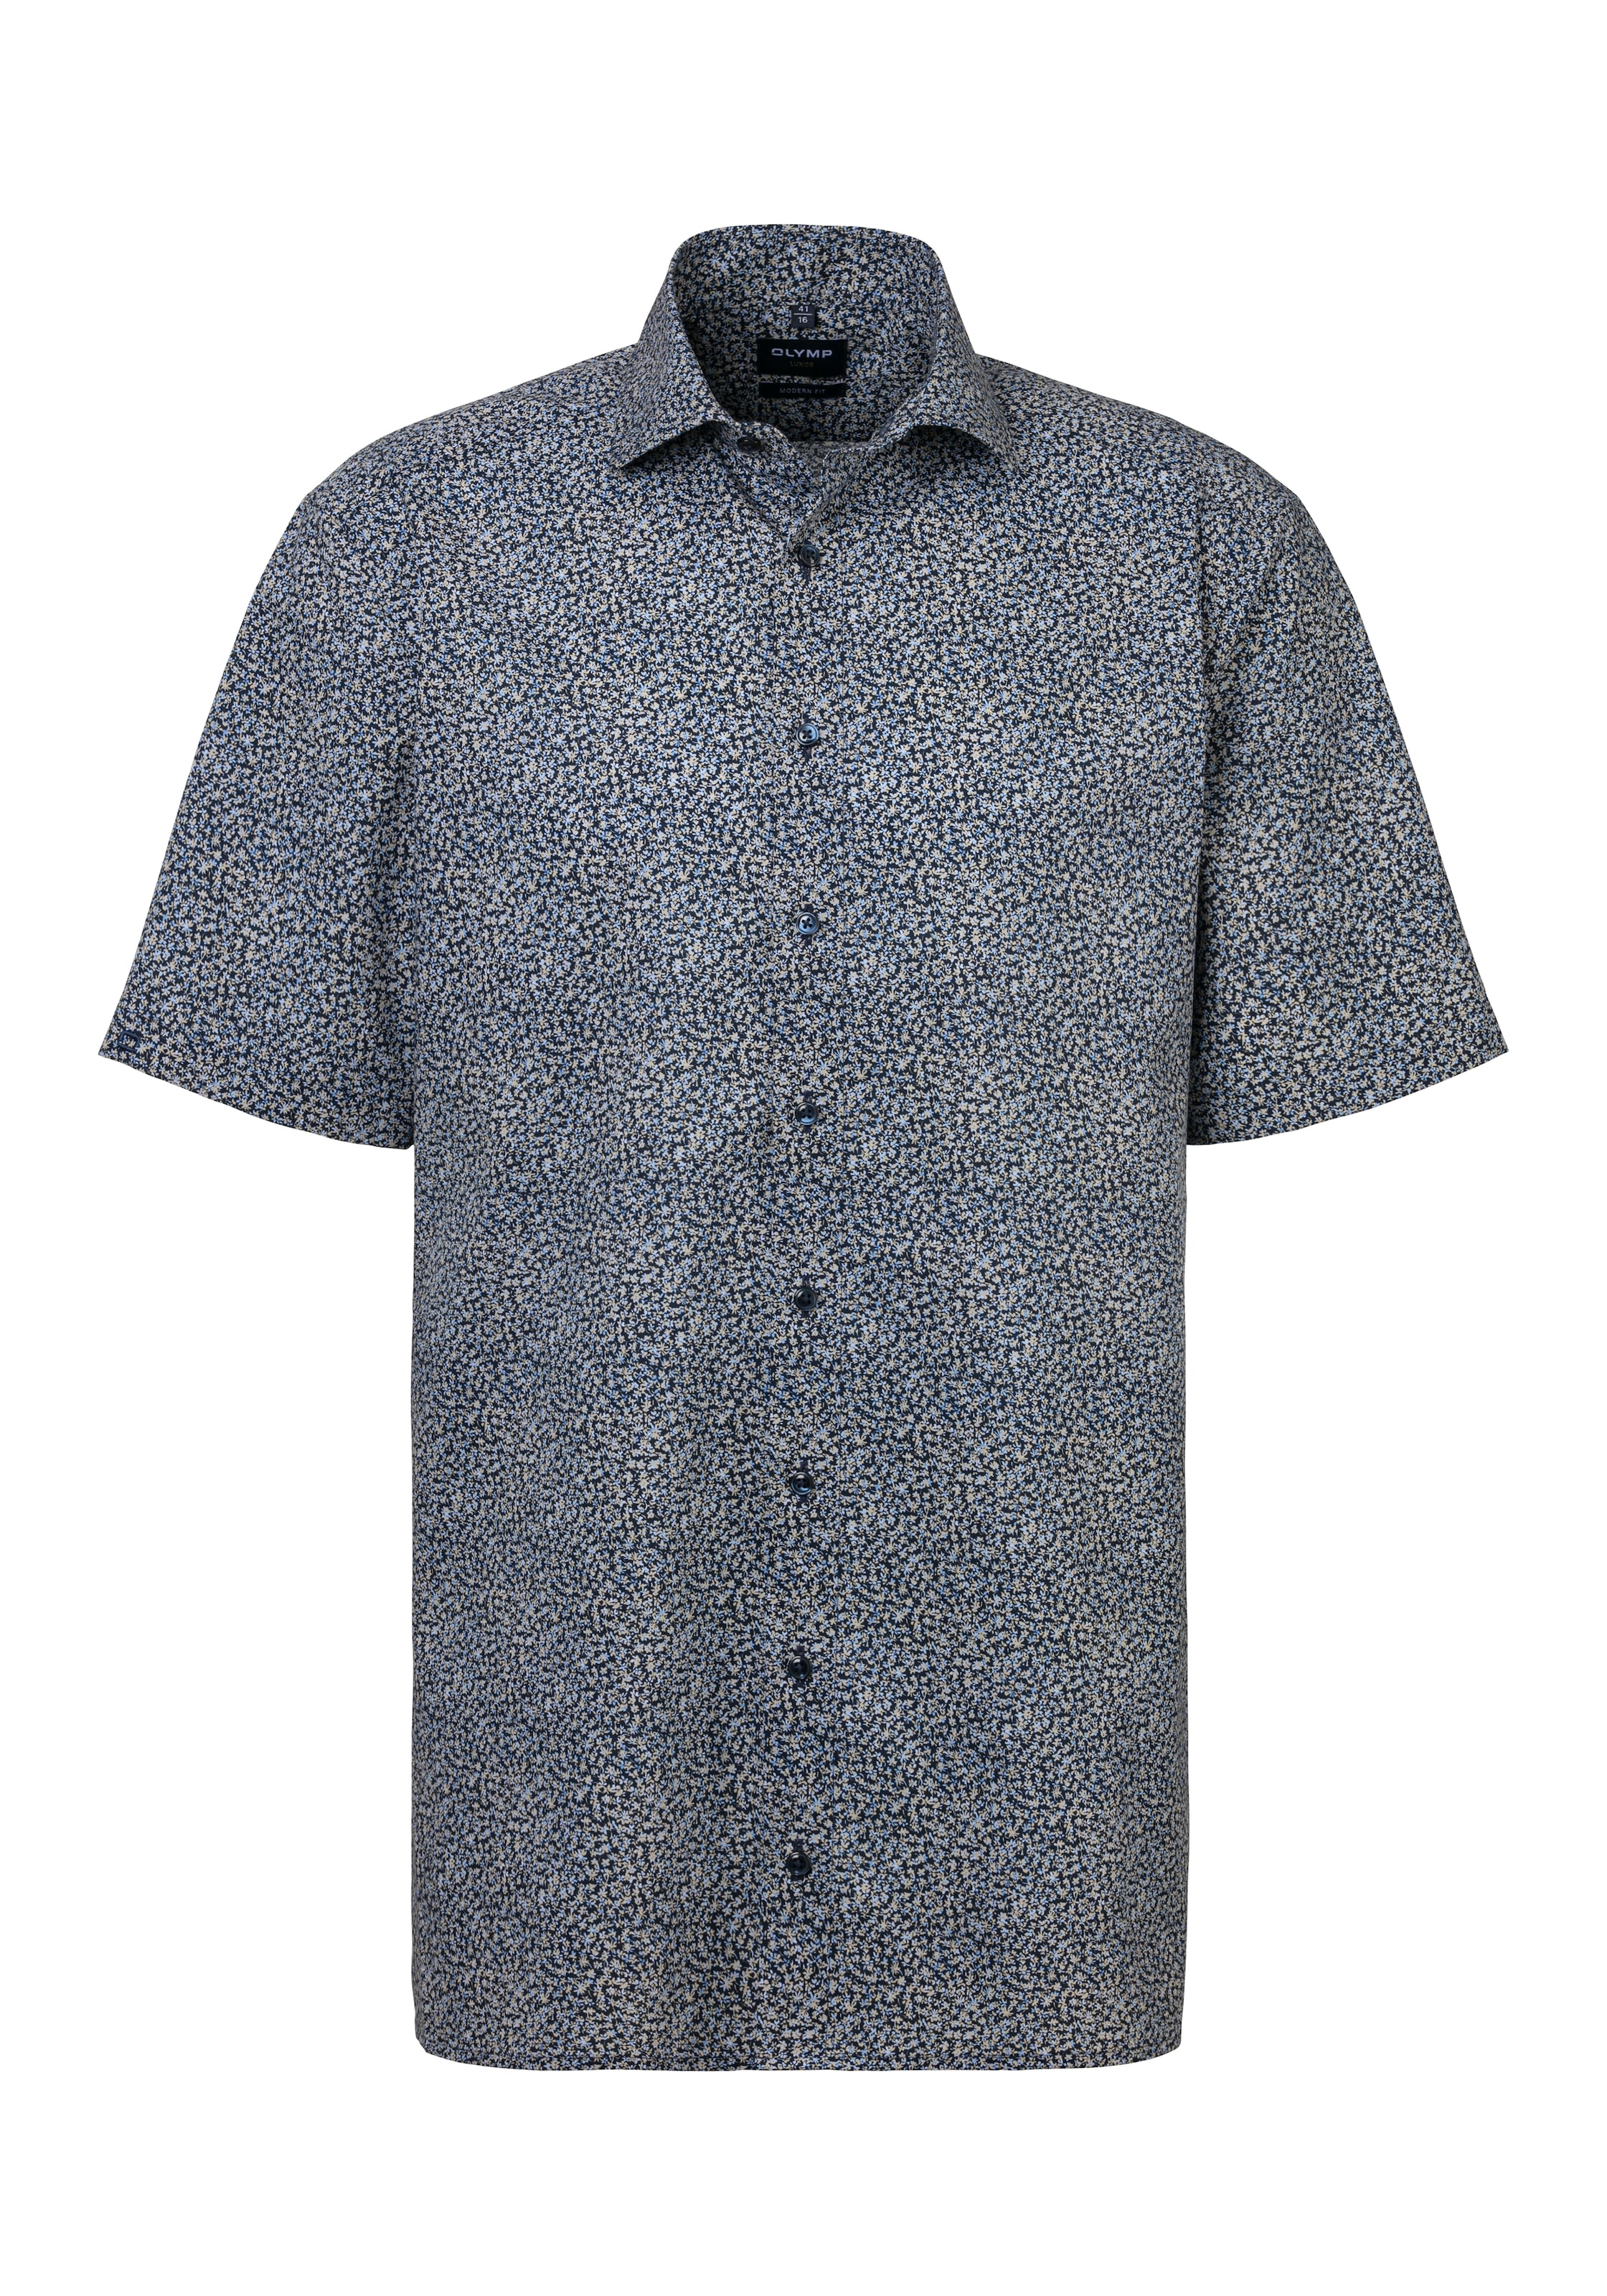 OLYMP Kurzarmhemd »Luxor Modern Fit«, mit Allover-Print, bügelfrei, atmungsaktiv